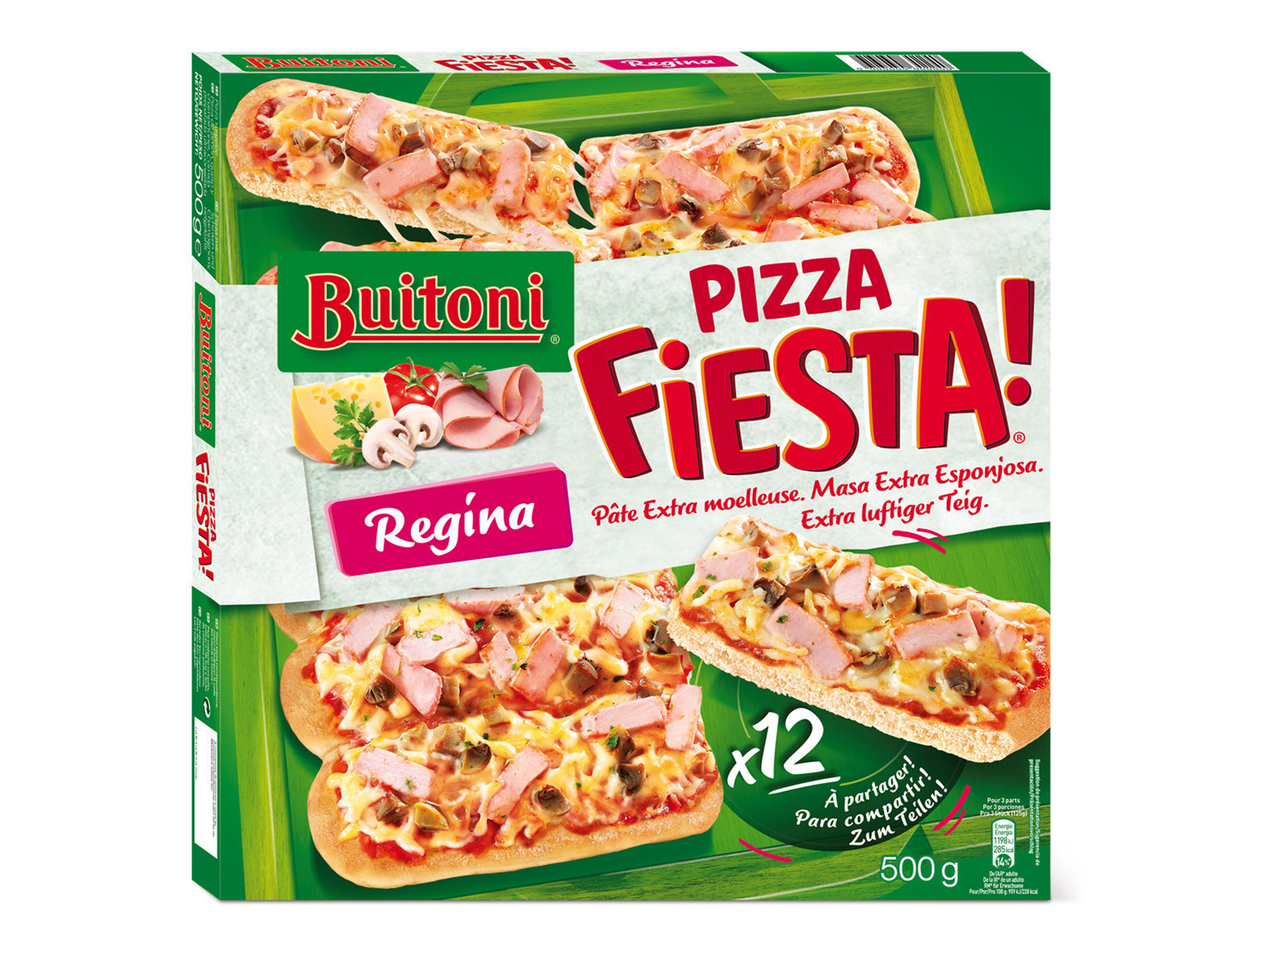 Buitoni Pizza Fiesta Regina